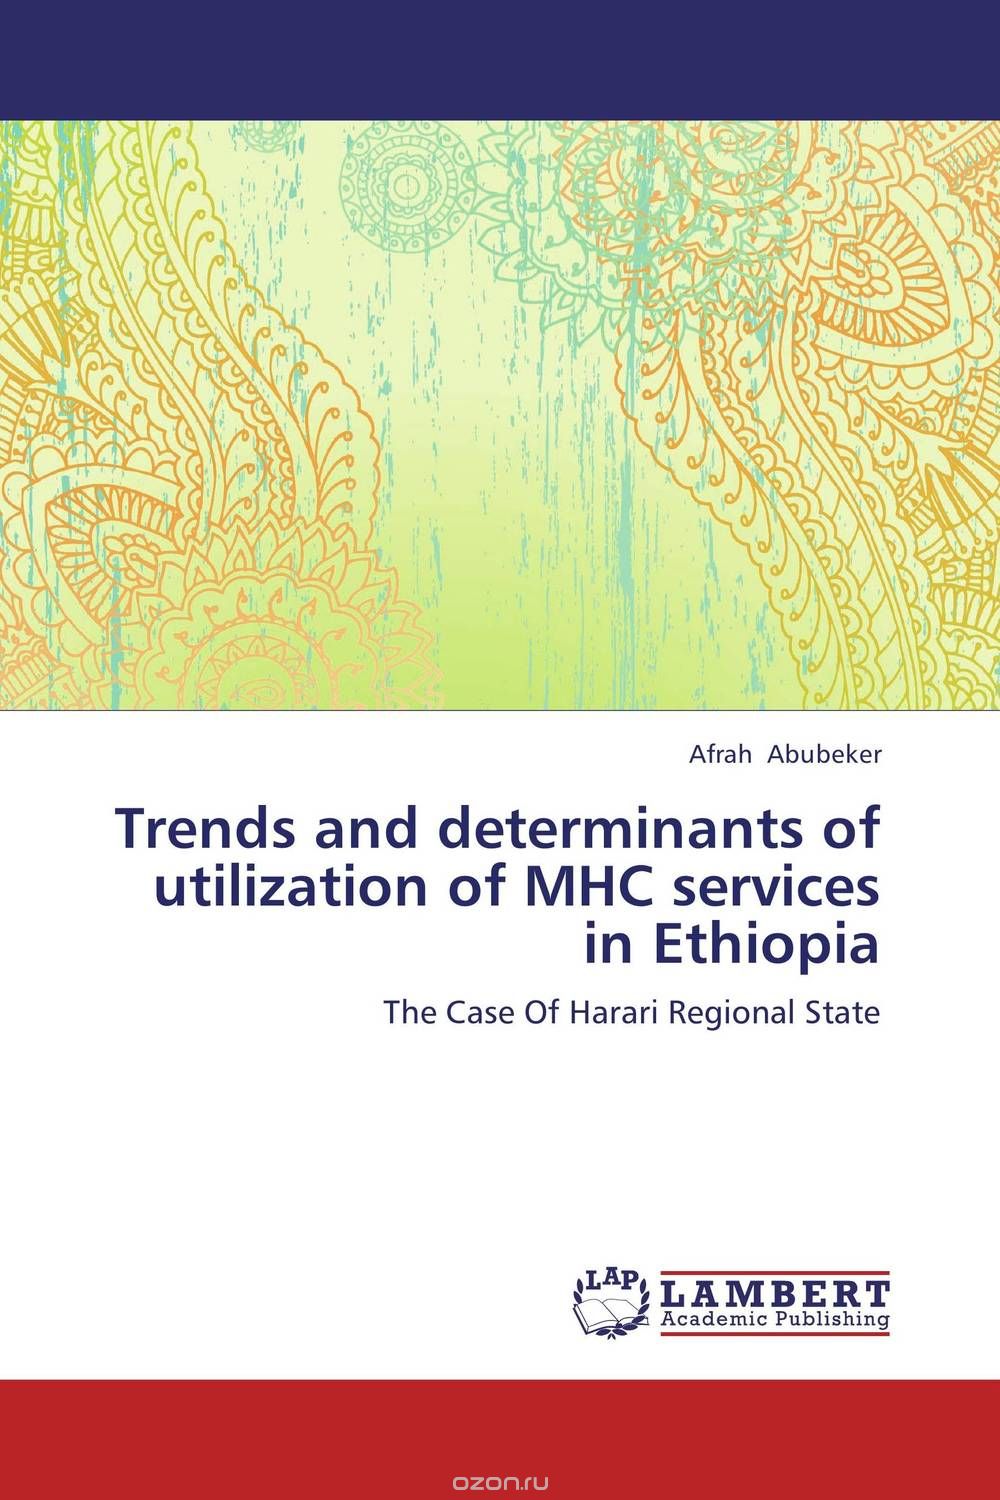 Скачать книгу "Trends and determinants of utilization of MHC services in Ethiopia"